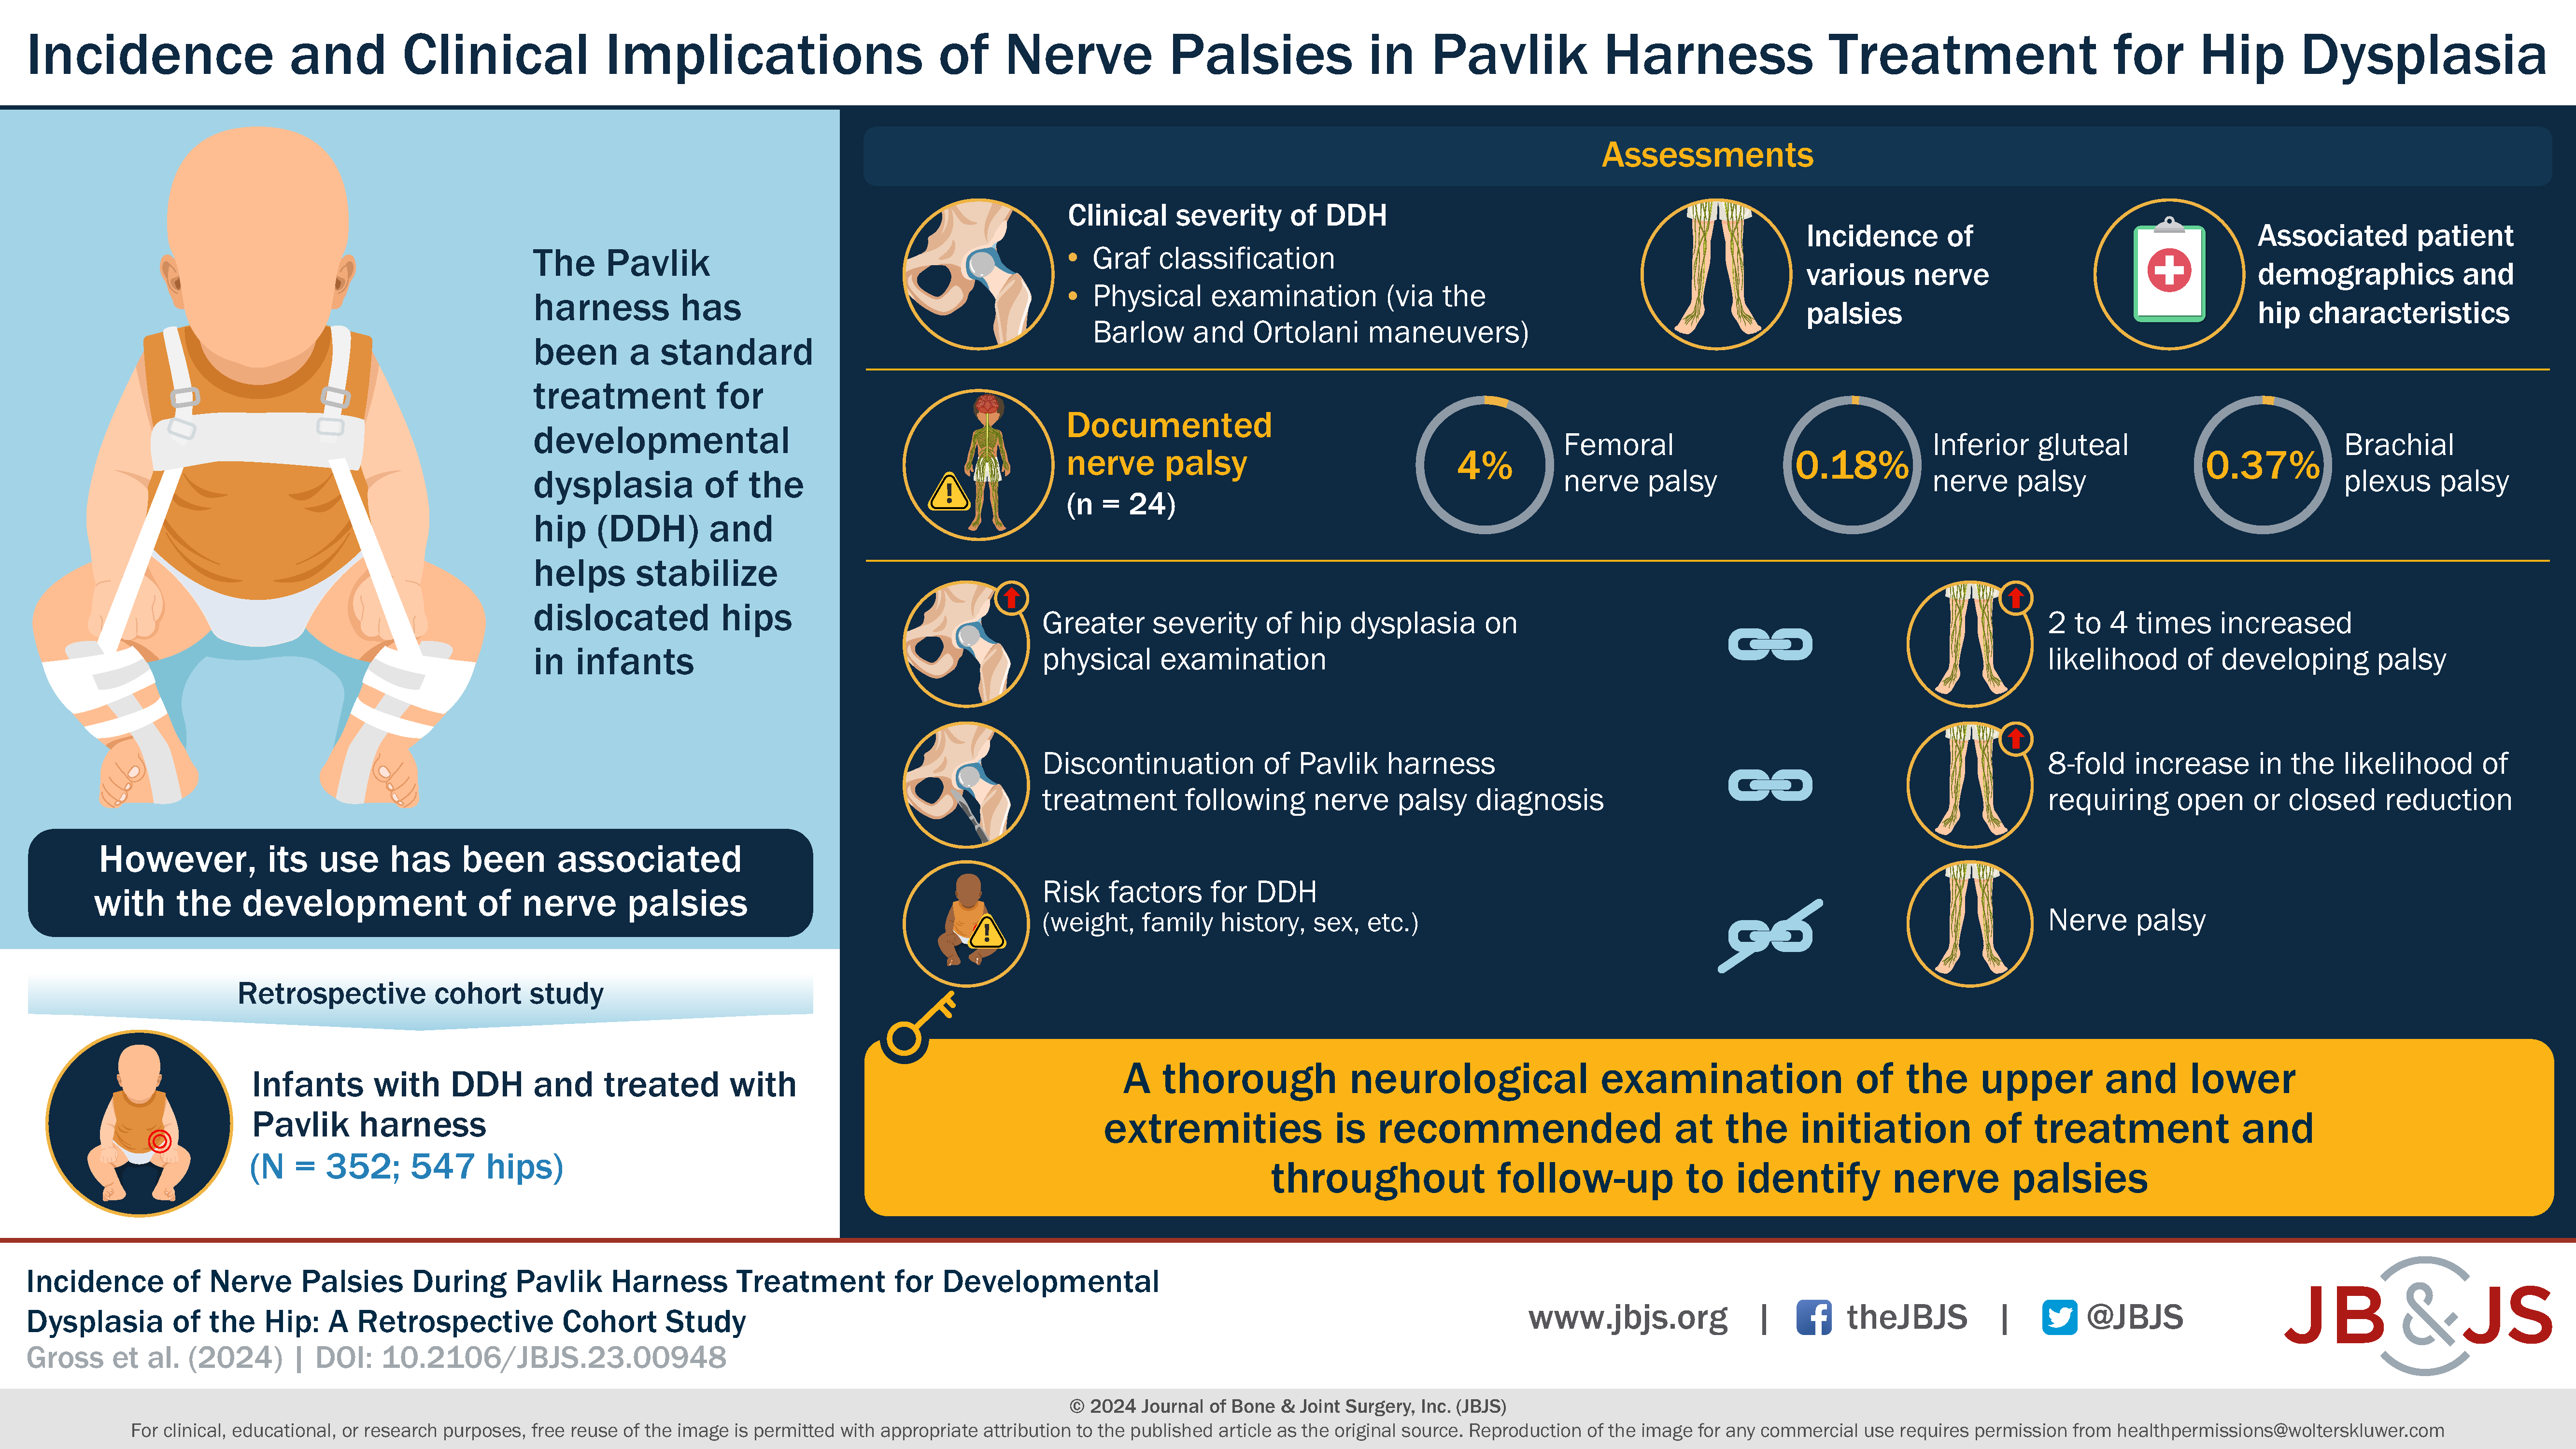 Incidence of Nerve Palsies During Pavlik Harness Treatment for Developmental Dysplasia of the Hip: A Retrospective Cohort Study